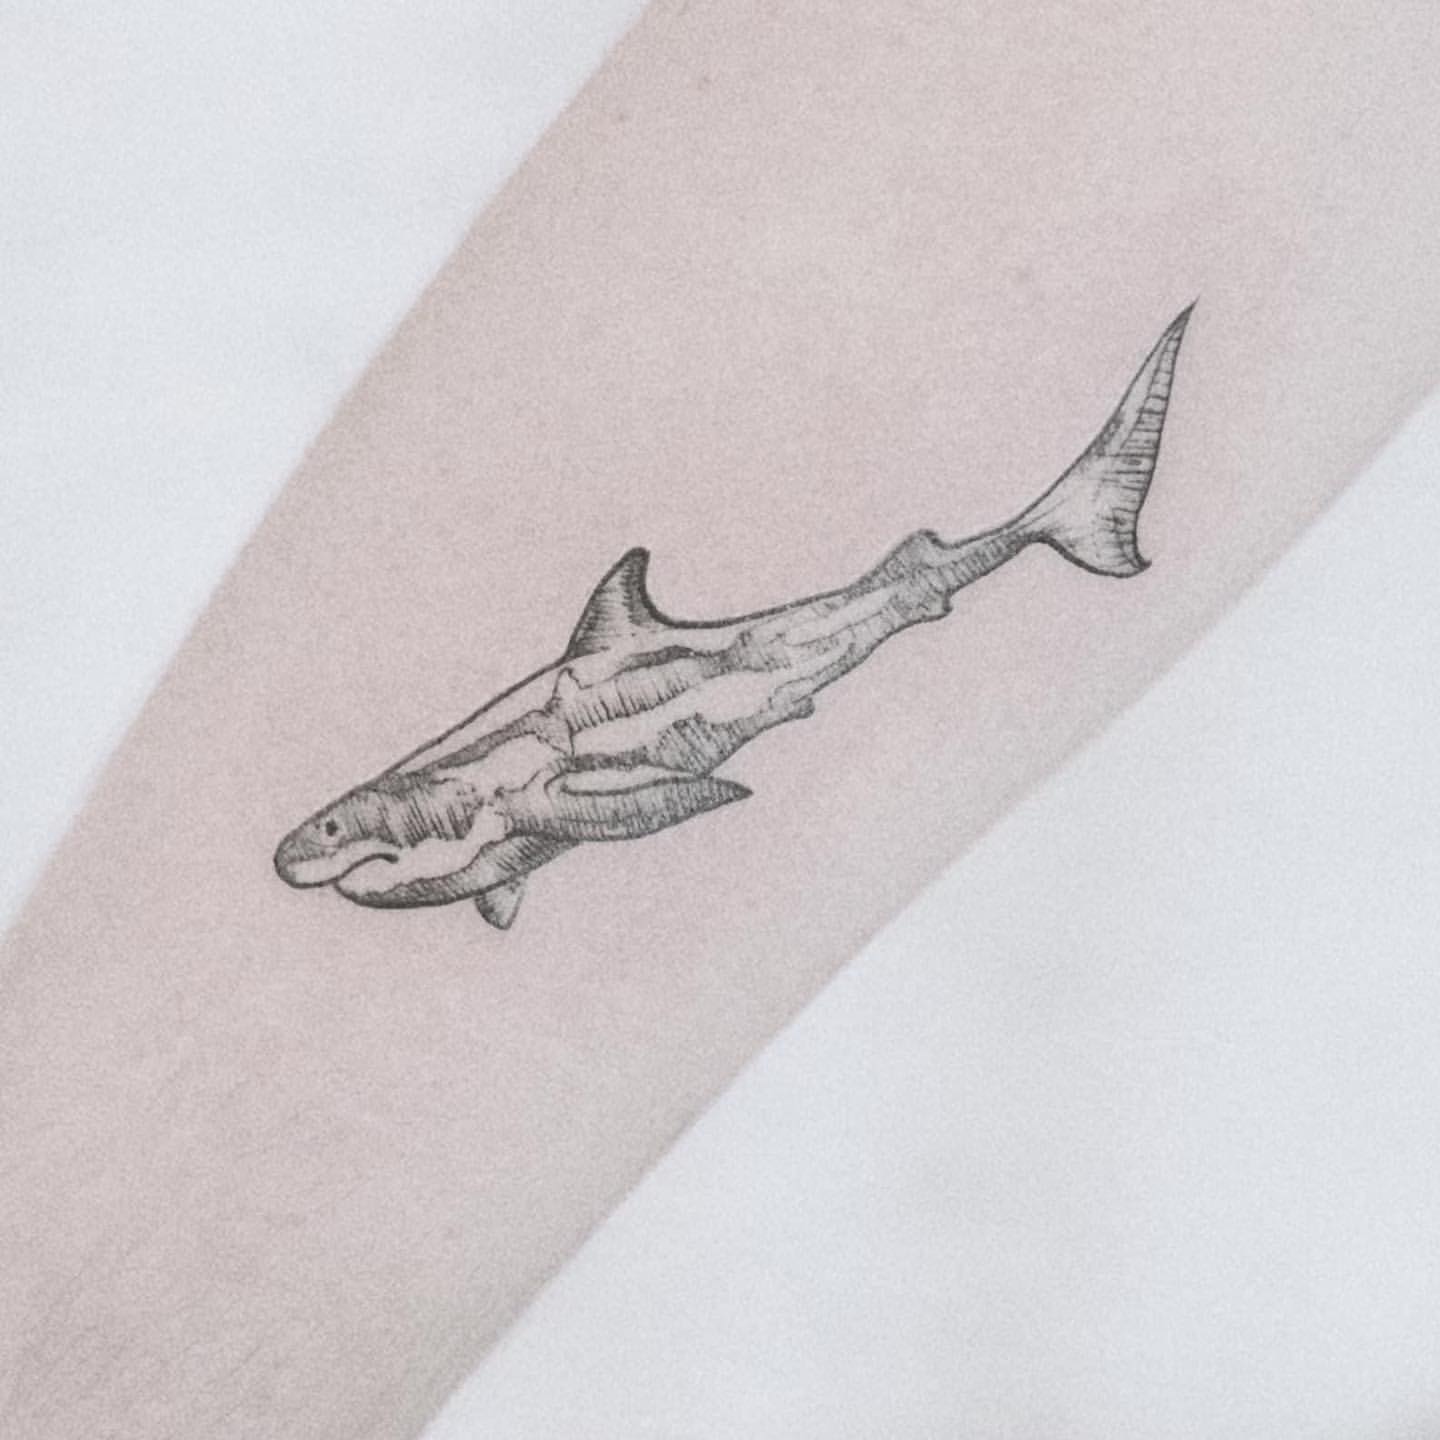 30 Sensational Shark Tattoo Ideas for Women & Men in 2023